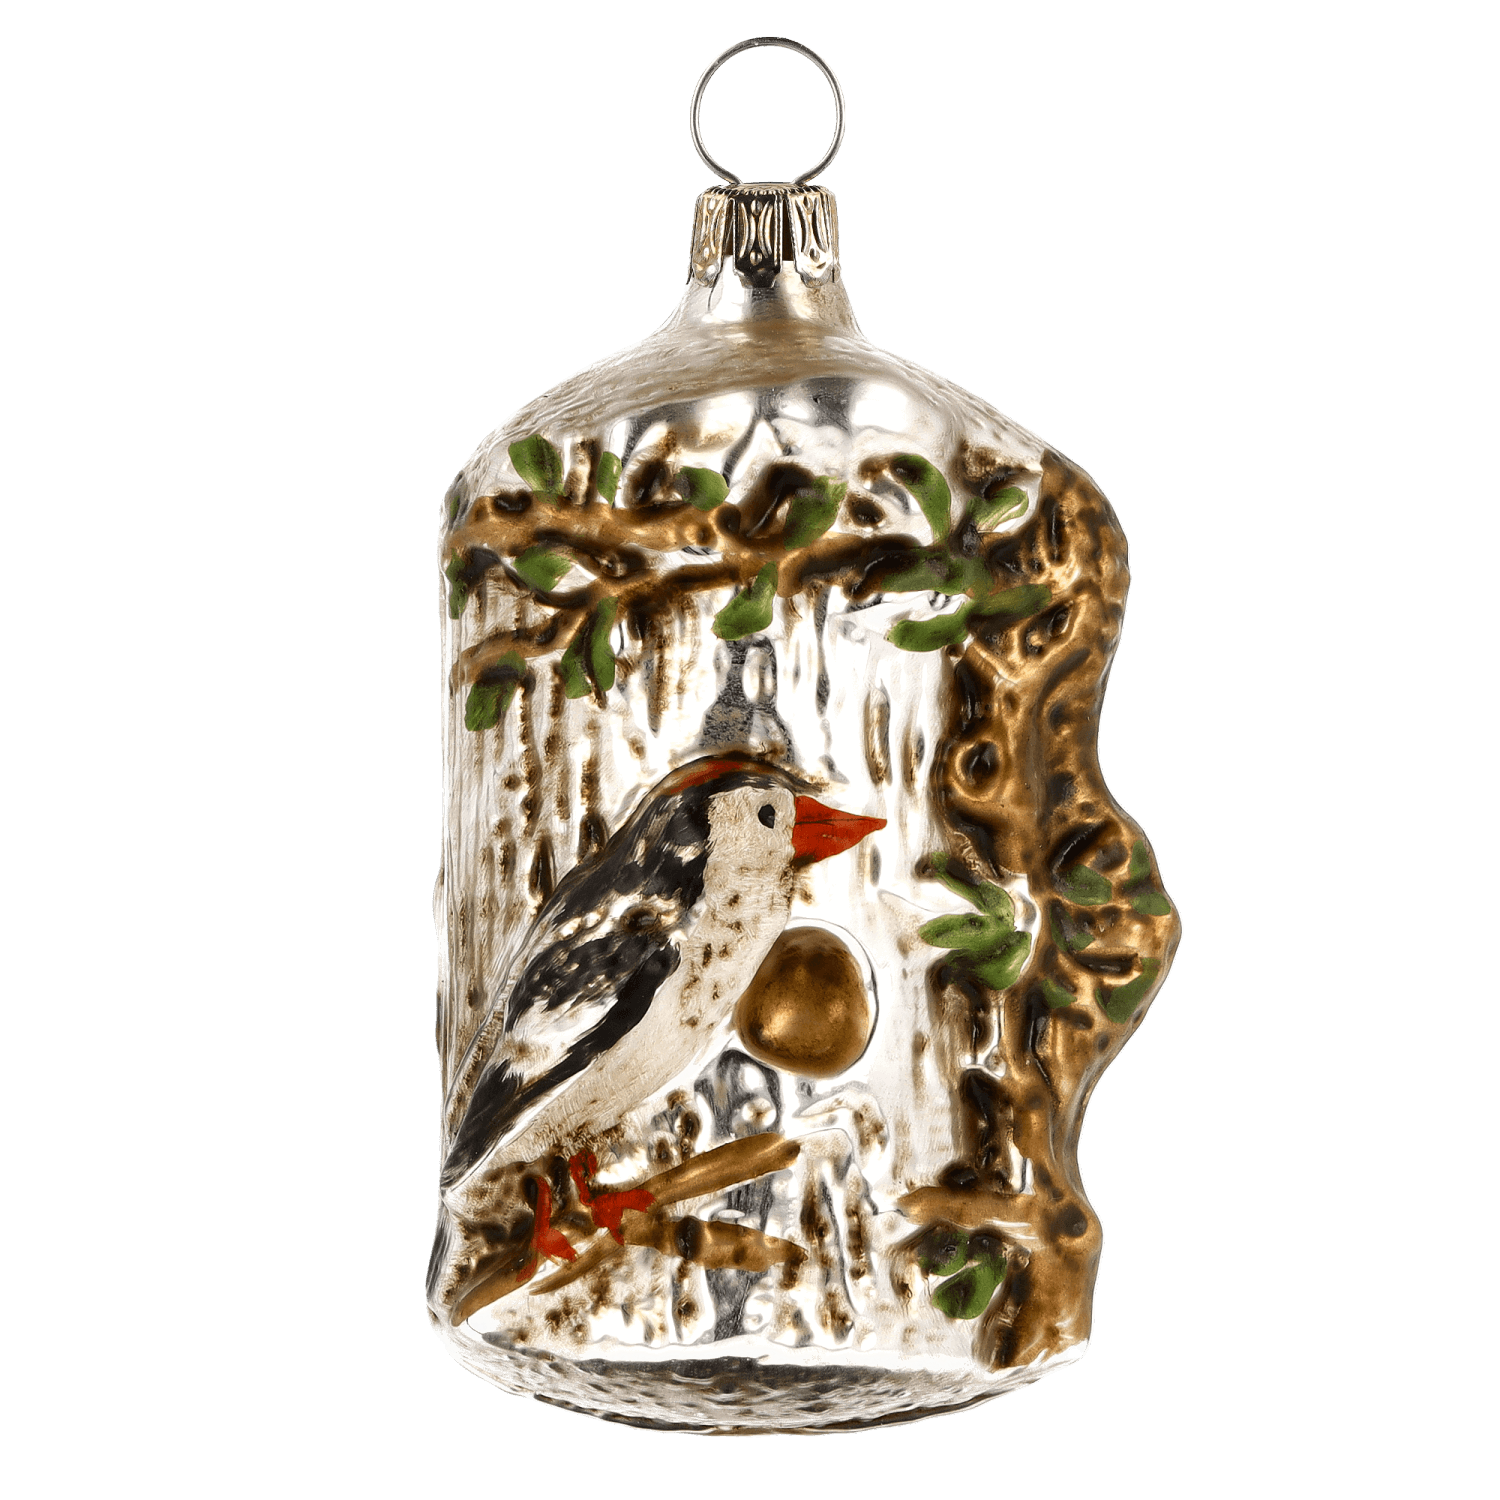 MAROLIN® - Glass ornament "Tree trunk with bird"